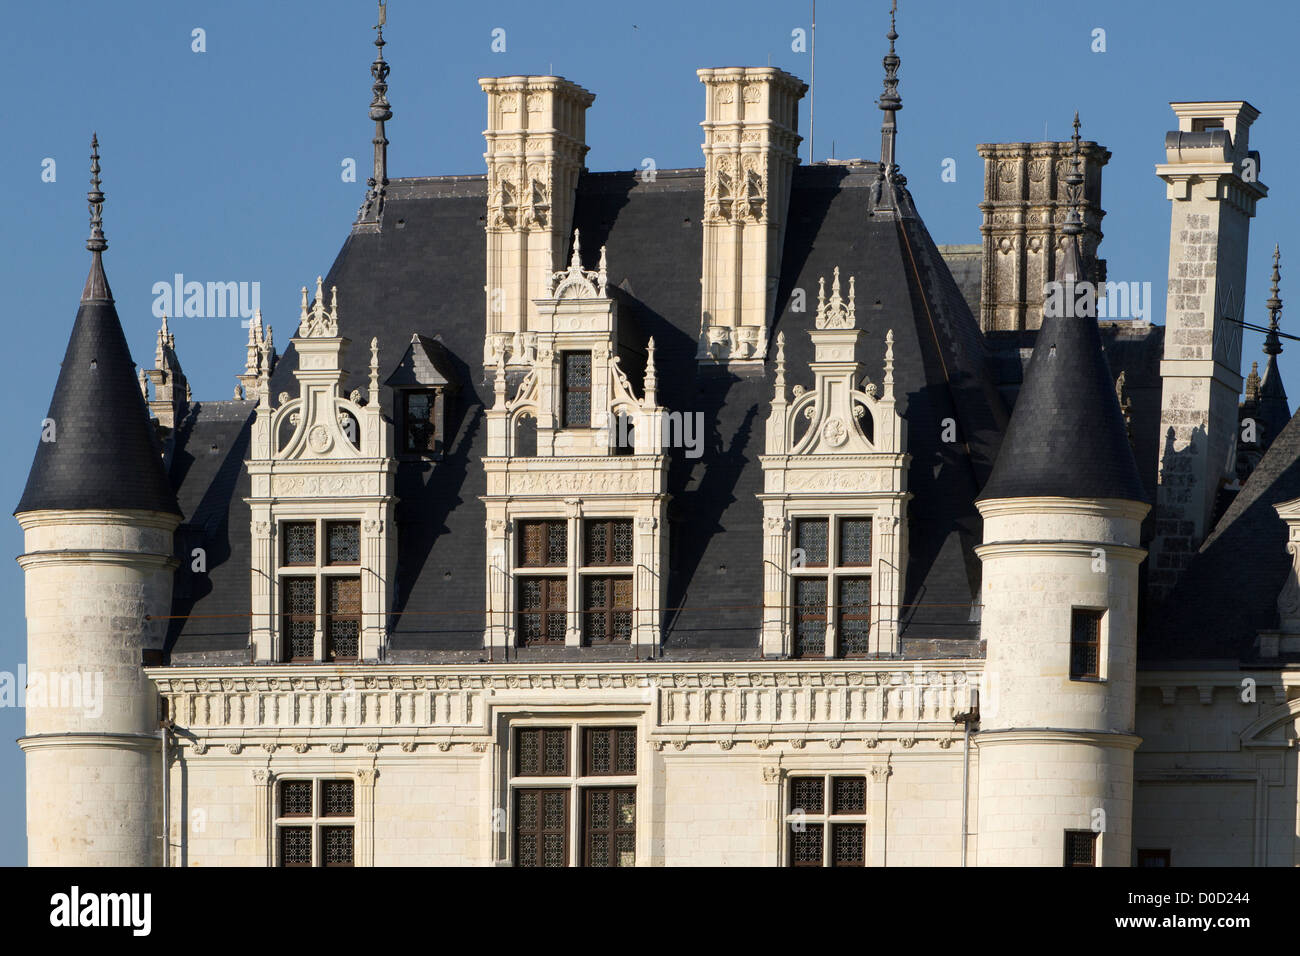 Detalle de la fachada con su arquitectura renacentista VENTANAS Y CHIMENEA CHATEAU DE CHENONCEAUX Indre-et-Loire (37) Francia Foto de stock